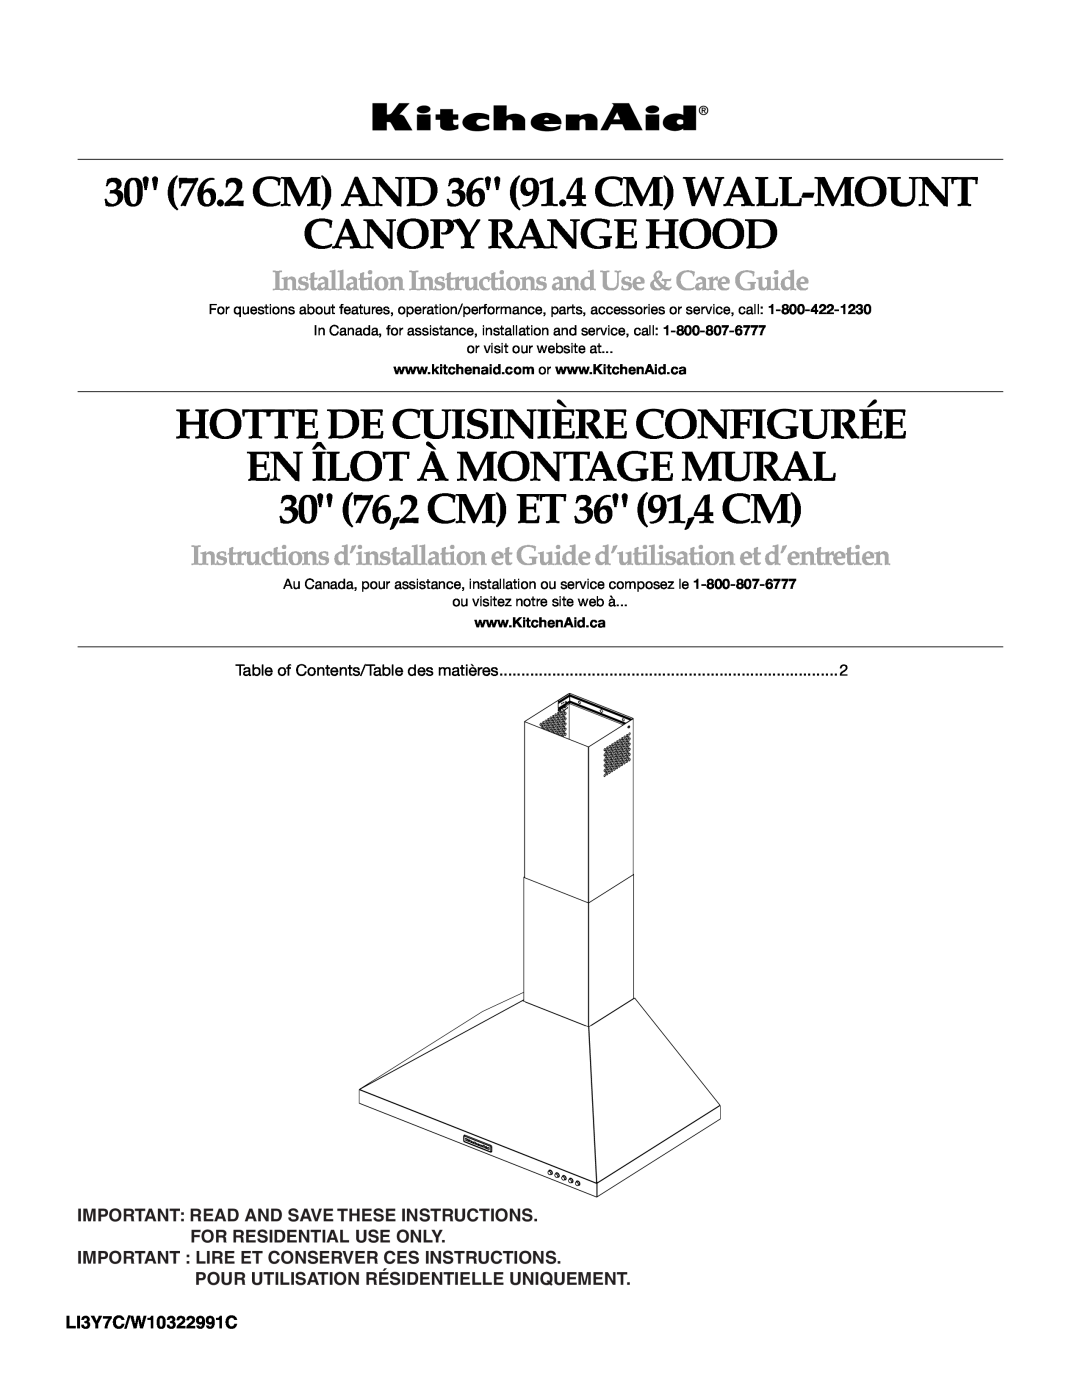 KitchenAid LI3Y7C/W10322991C installation instructions 30 76.2 CM AND 36 91.4 CM WALL-MOUNT CANOPY RANGE HOOD 